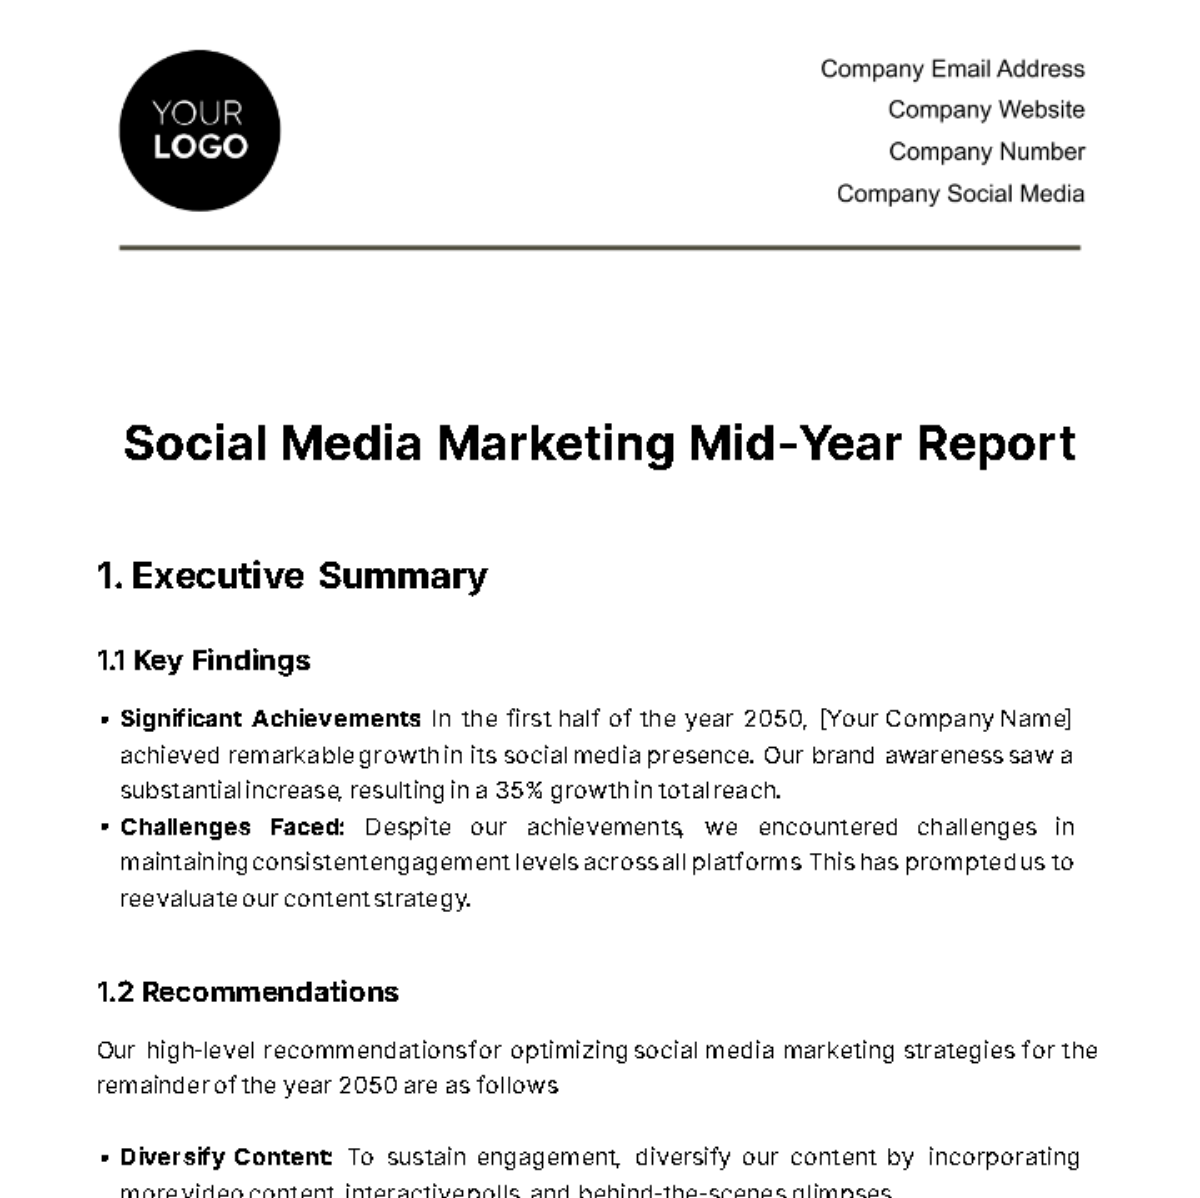 Social Media Marketing Mid-Year Report Template